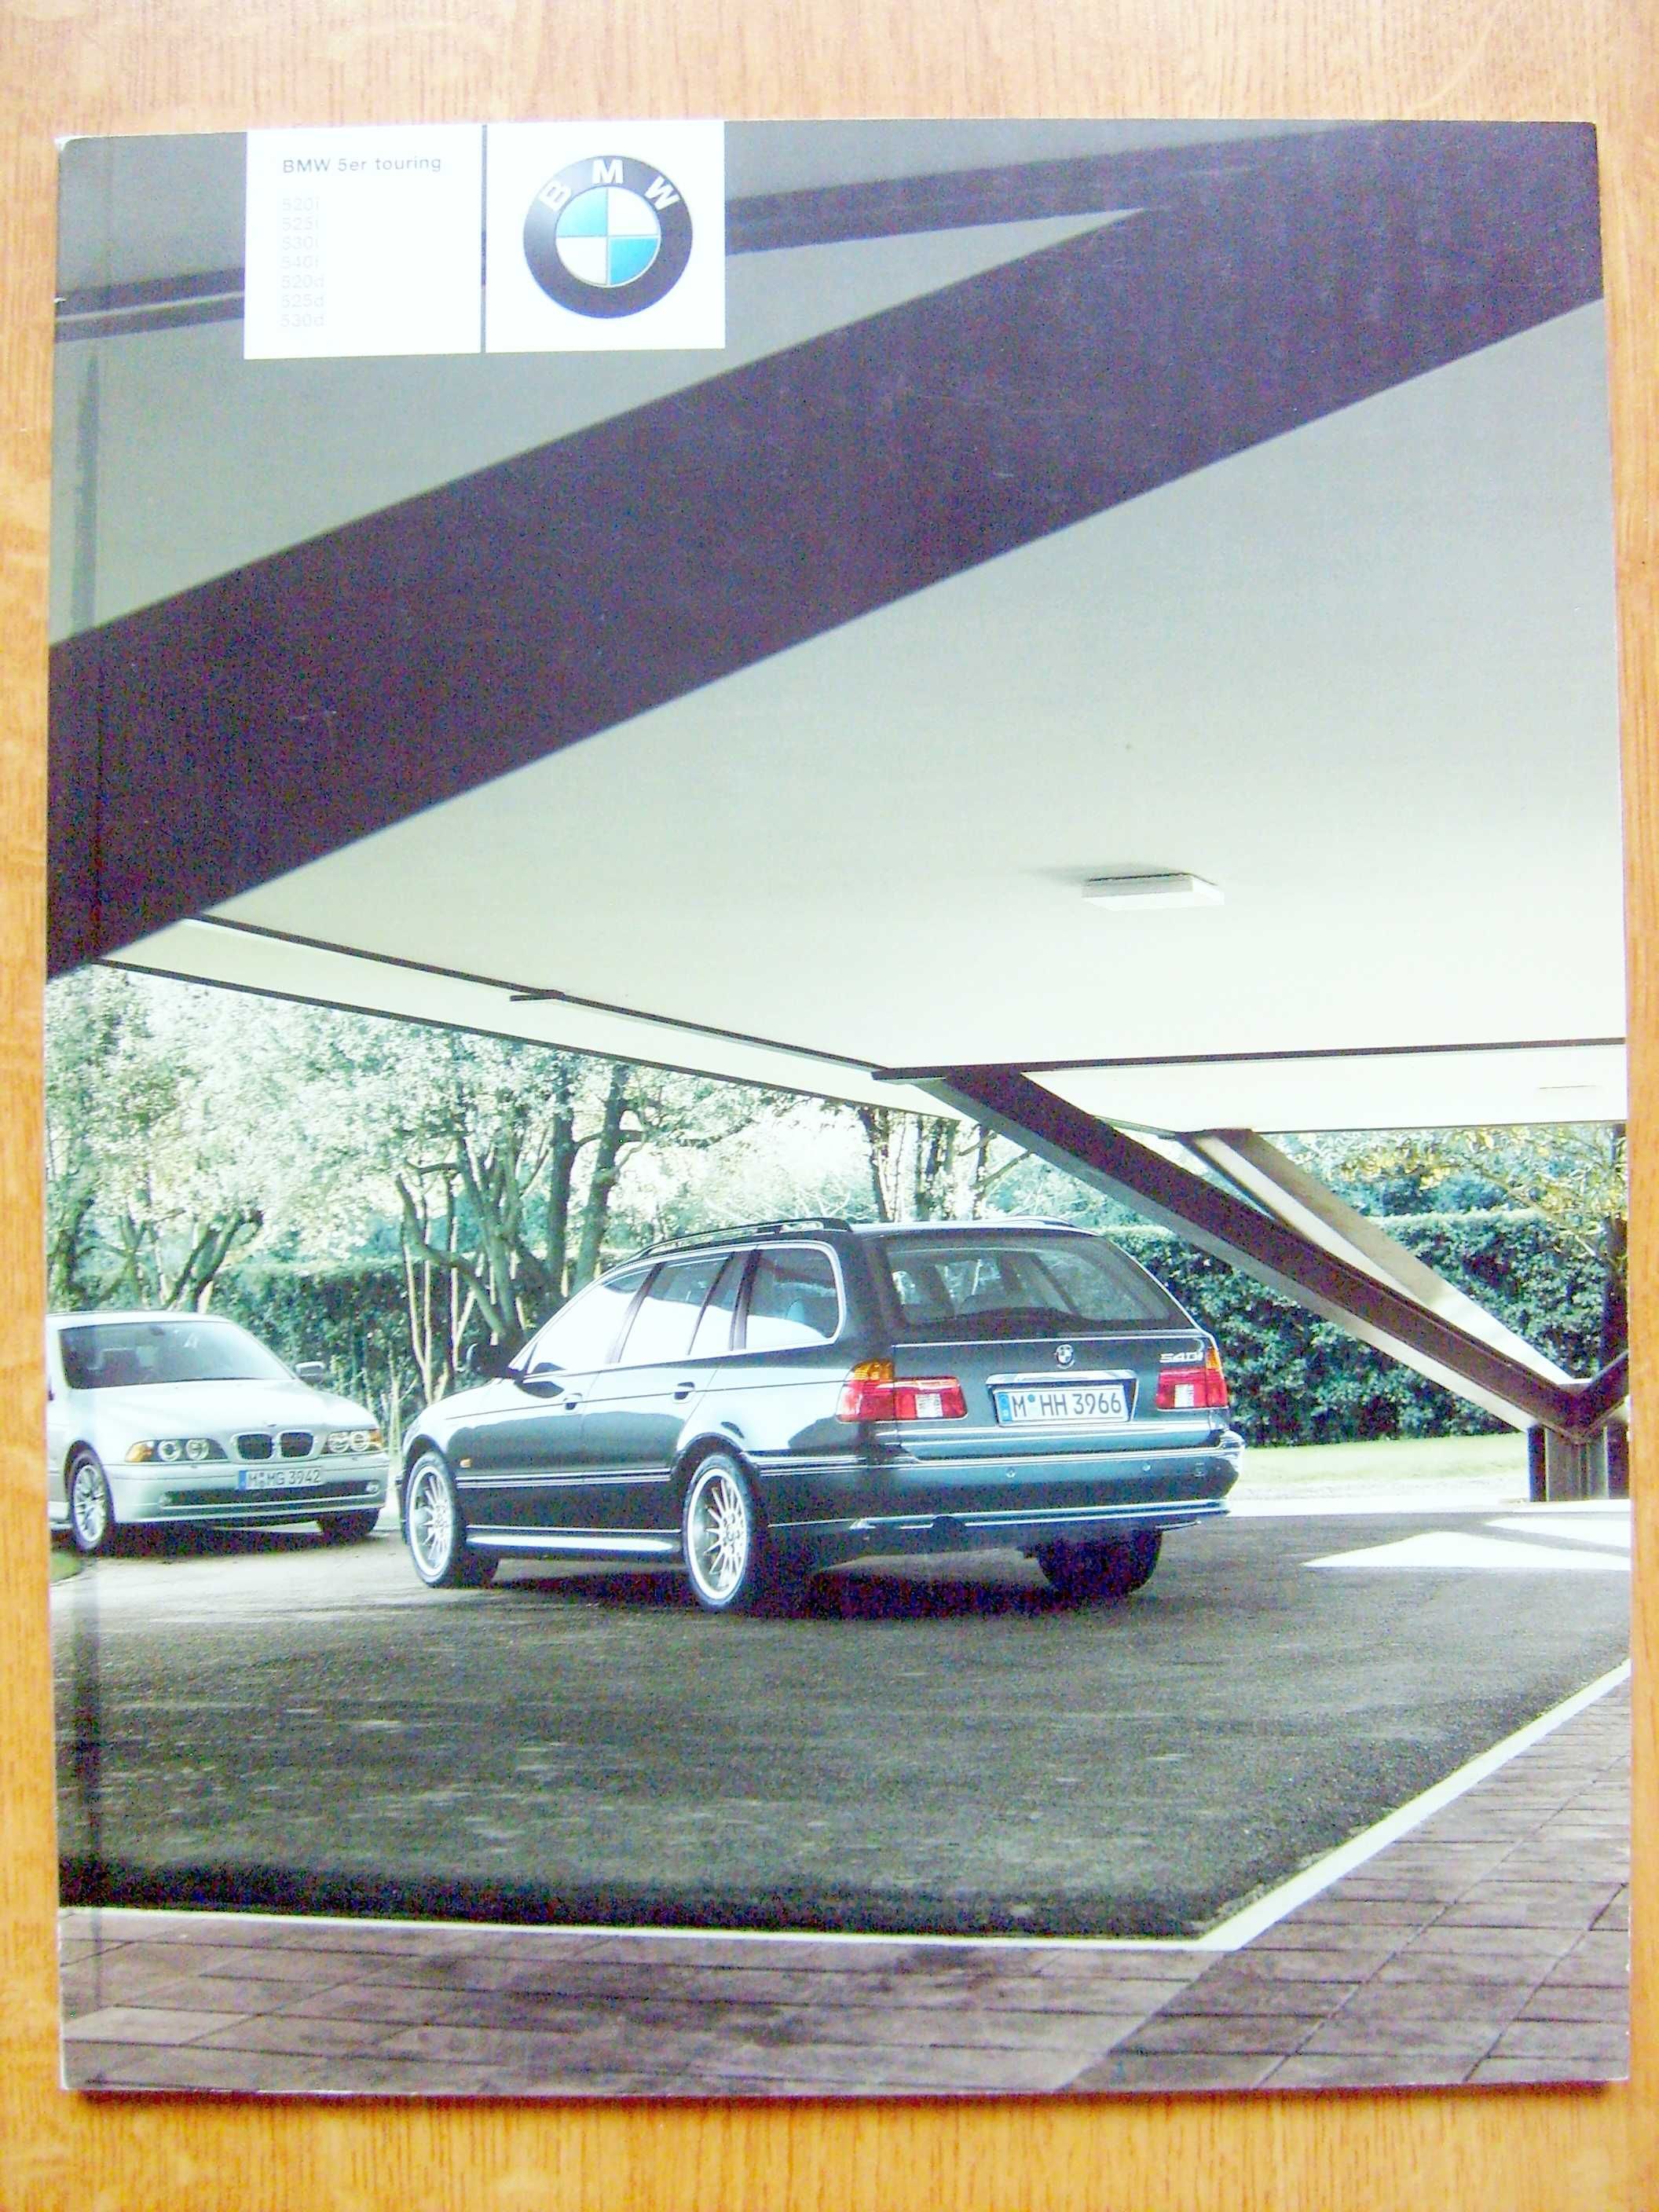 BMW seria 5 E39 Touring 2000 / bardzo obszerny prospekt - 90 stron !